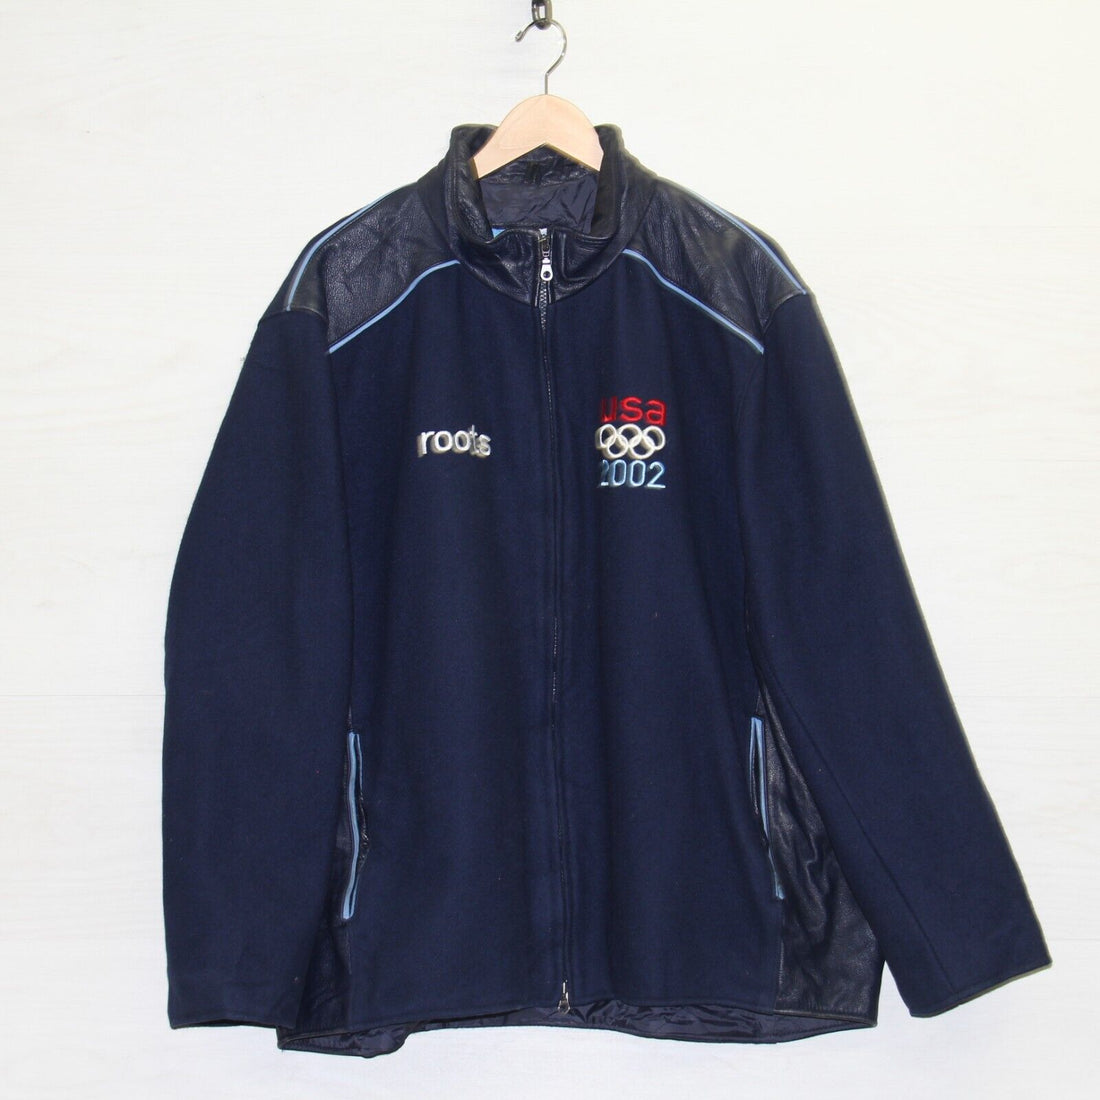 Vintage Team USA Roots Leather Wool Varsity Jacket Size 2XL Blue 2002 Olympics